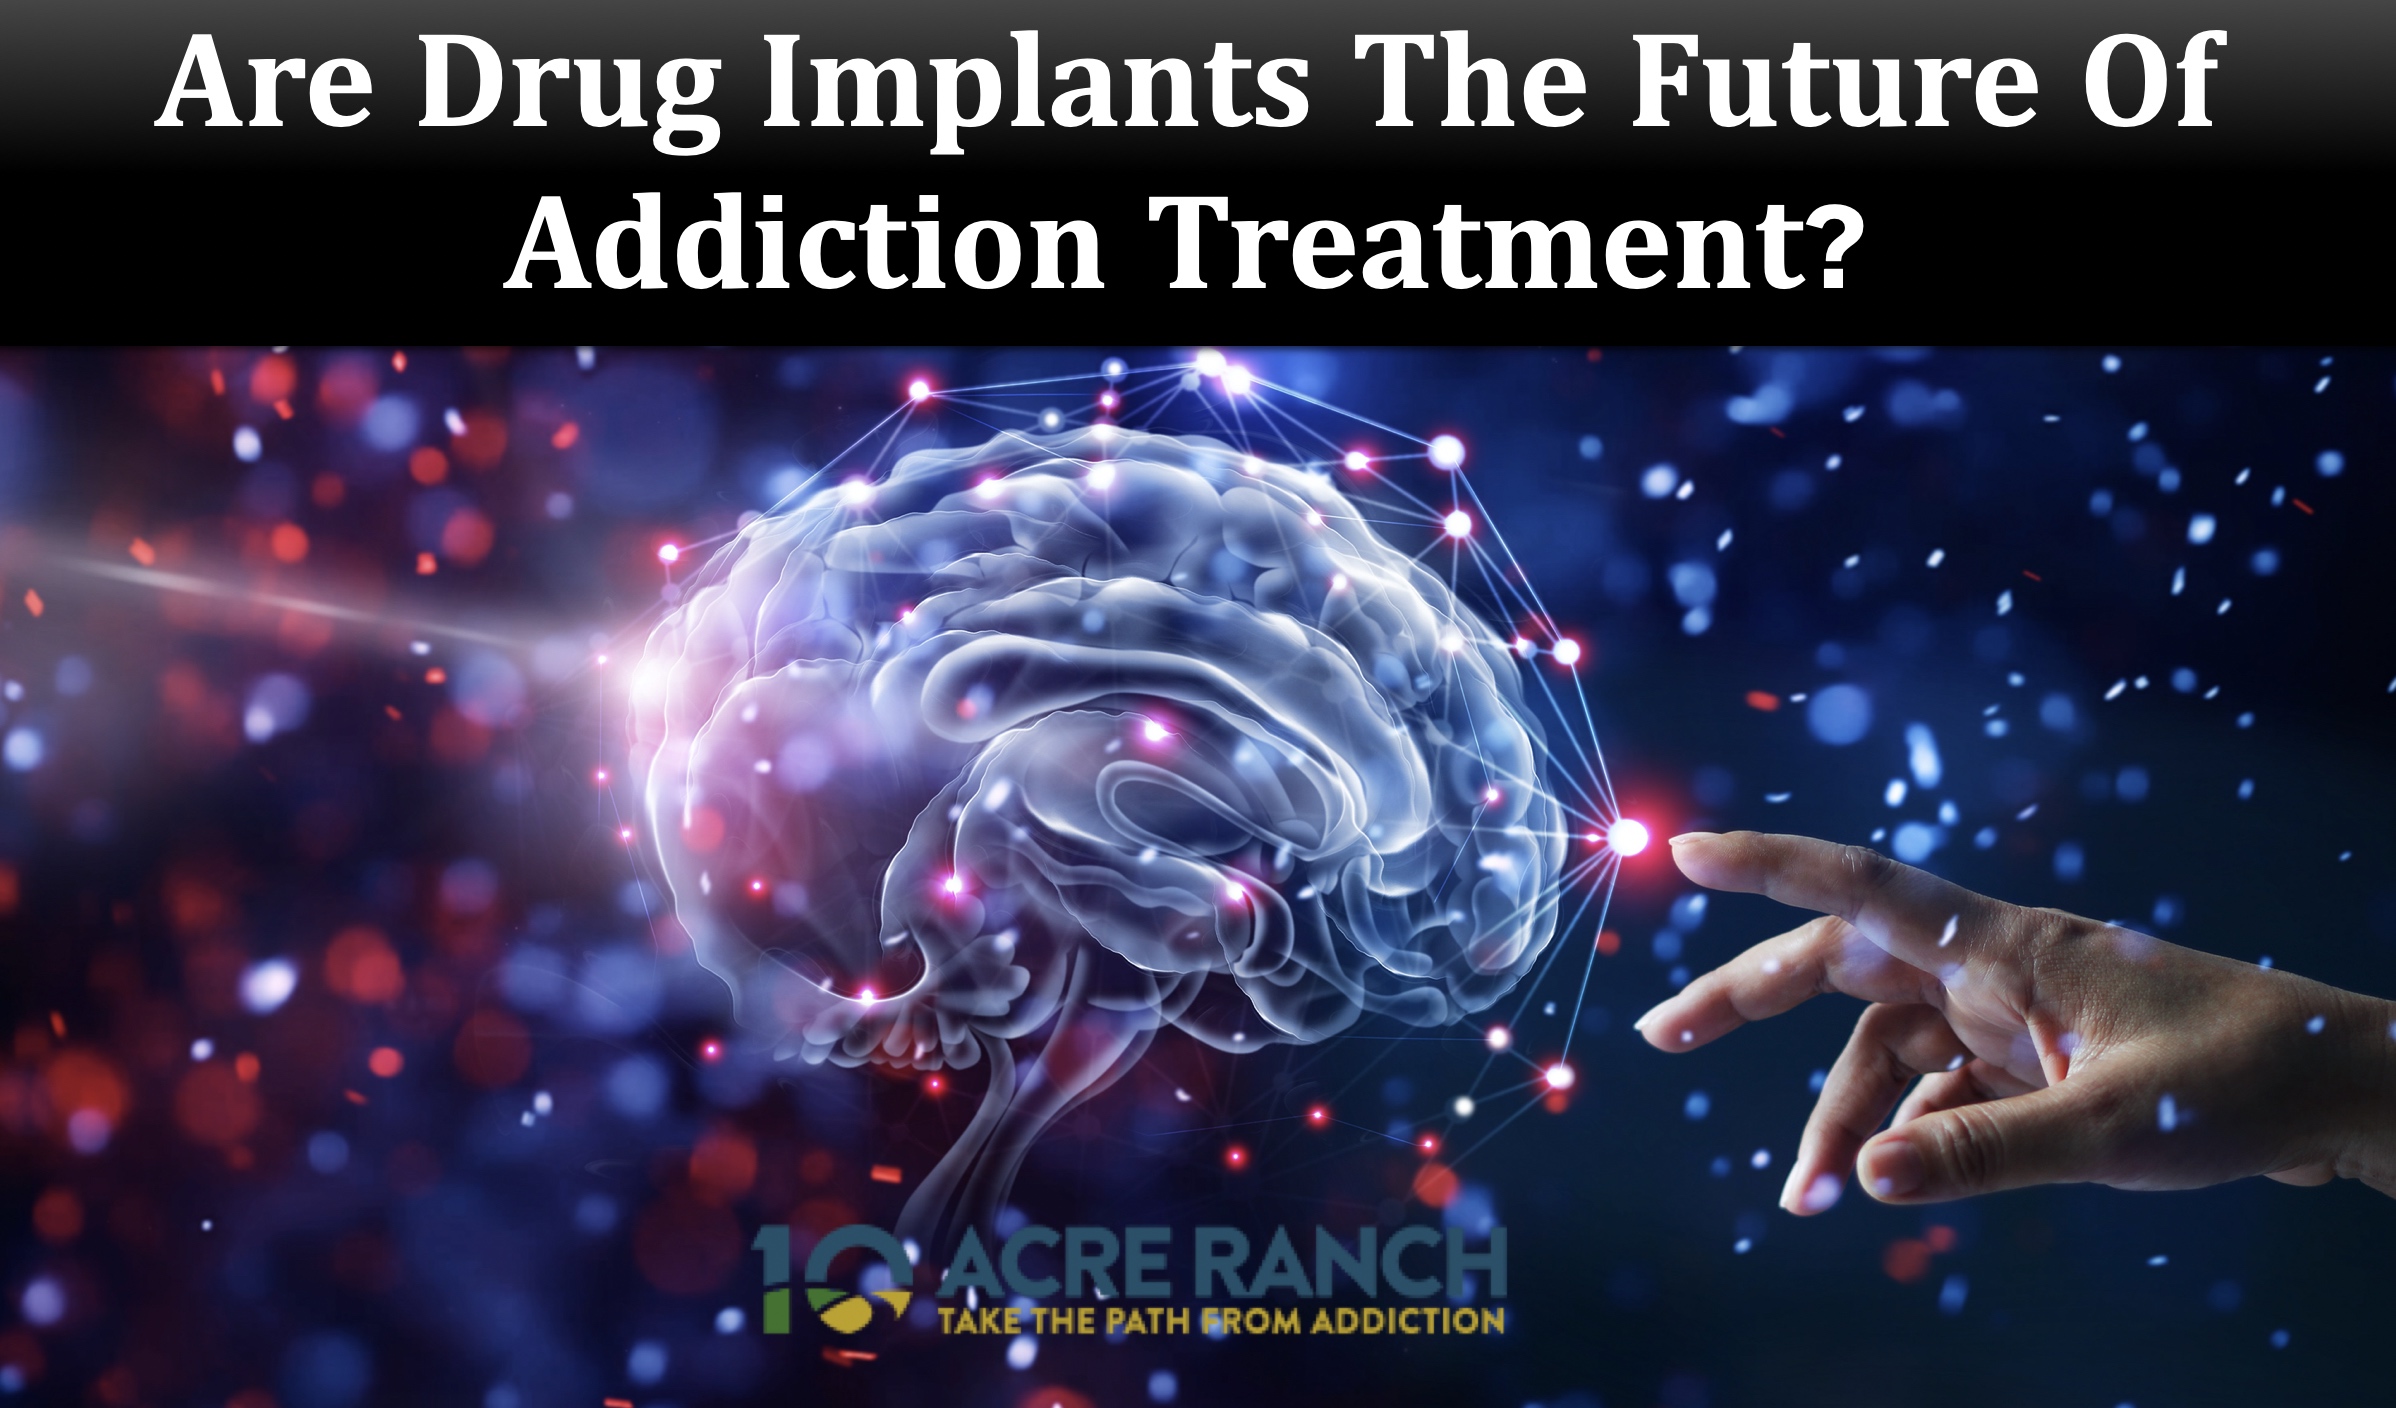 drug-implants-buprenorphine-naxtrexone-addiction-treatment-future-study-medical-science-Riverside-California